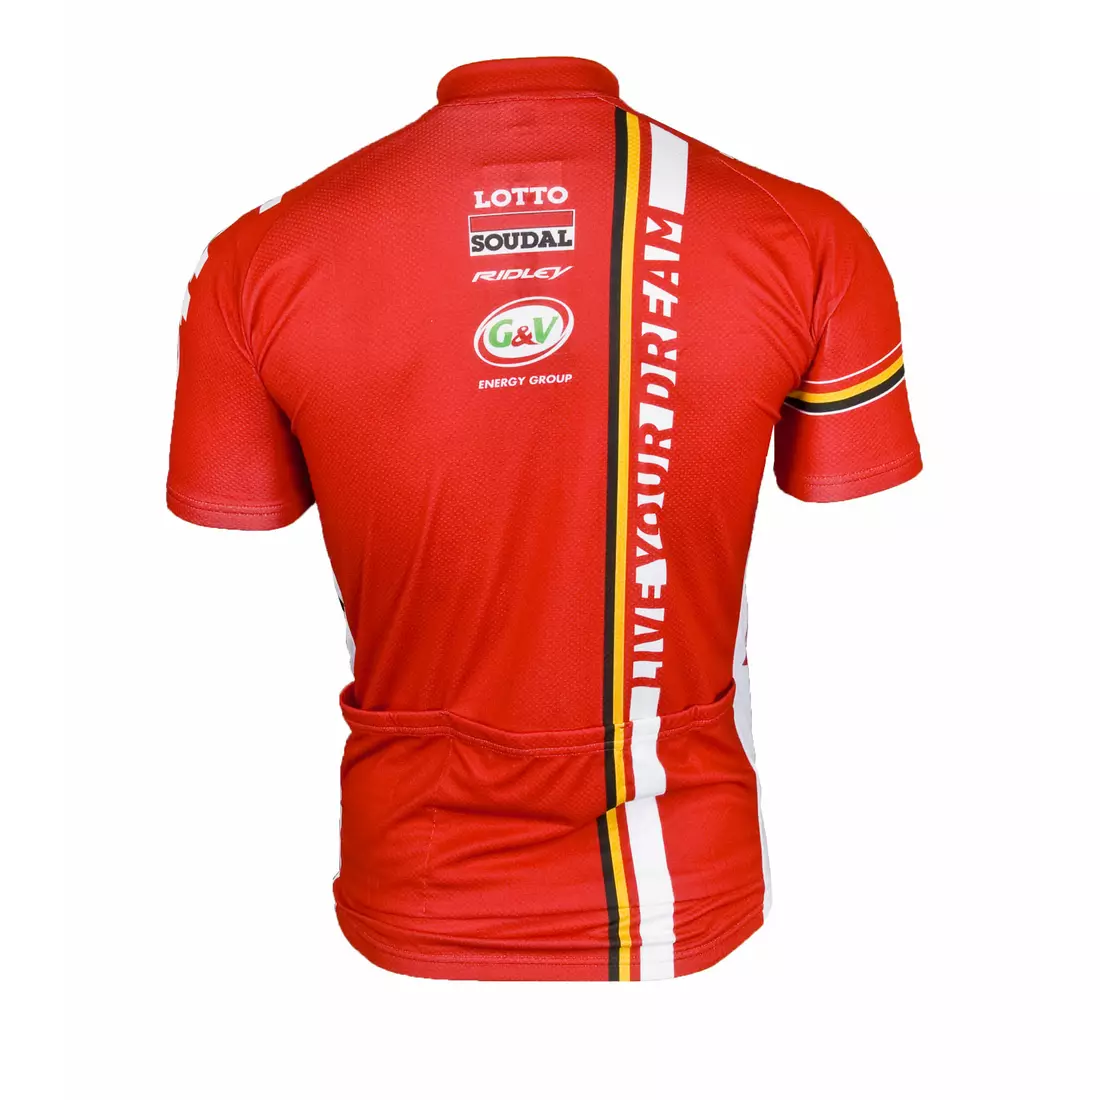 LOTTO SOUDAL cycling jersey 2015